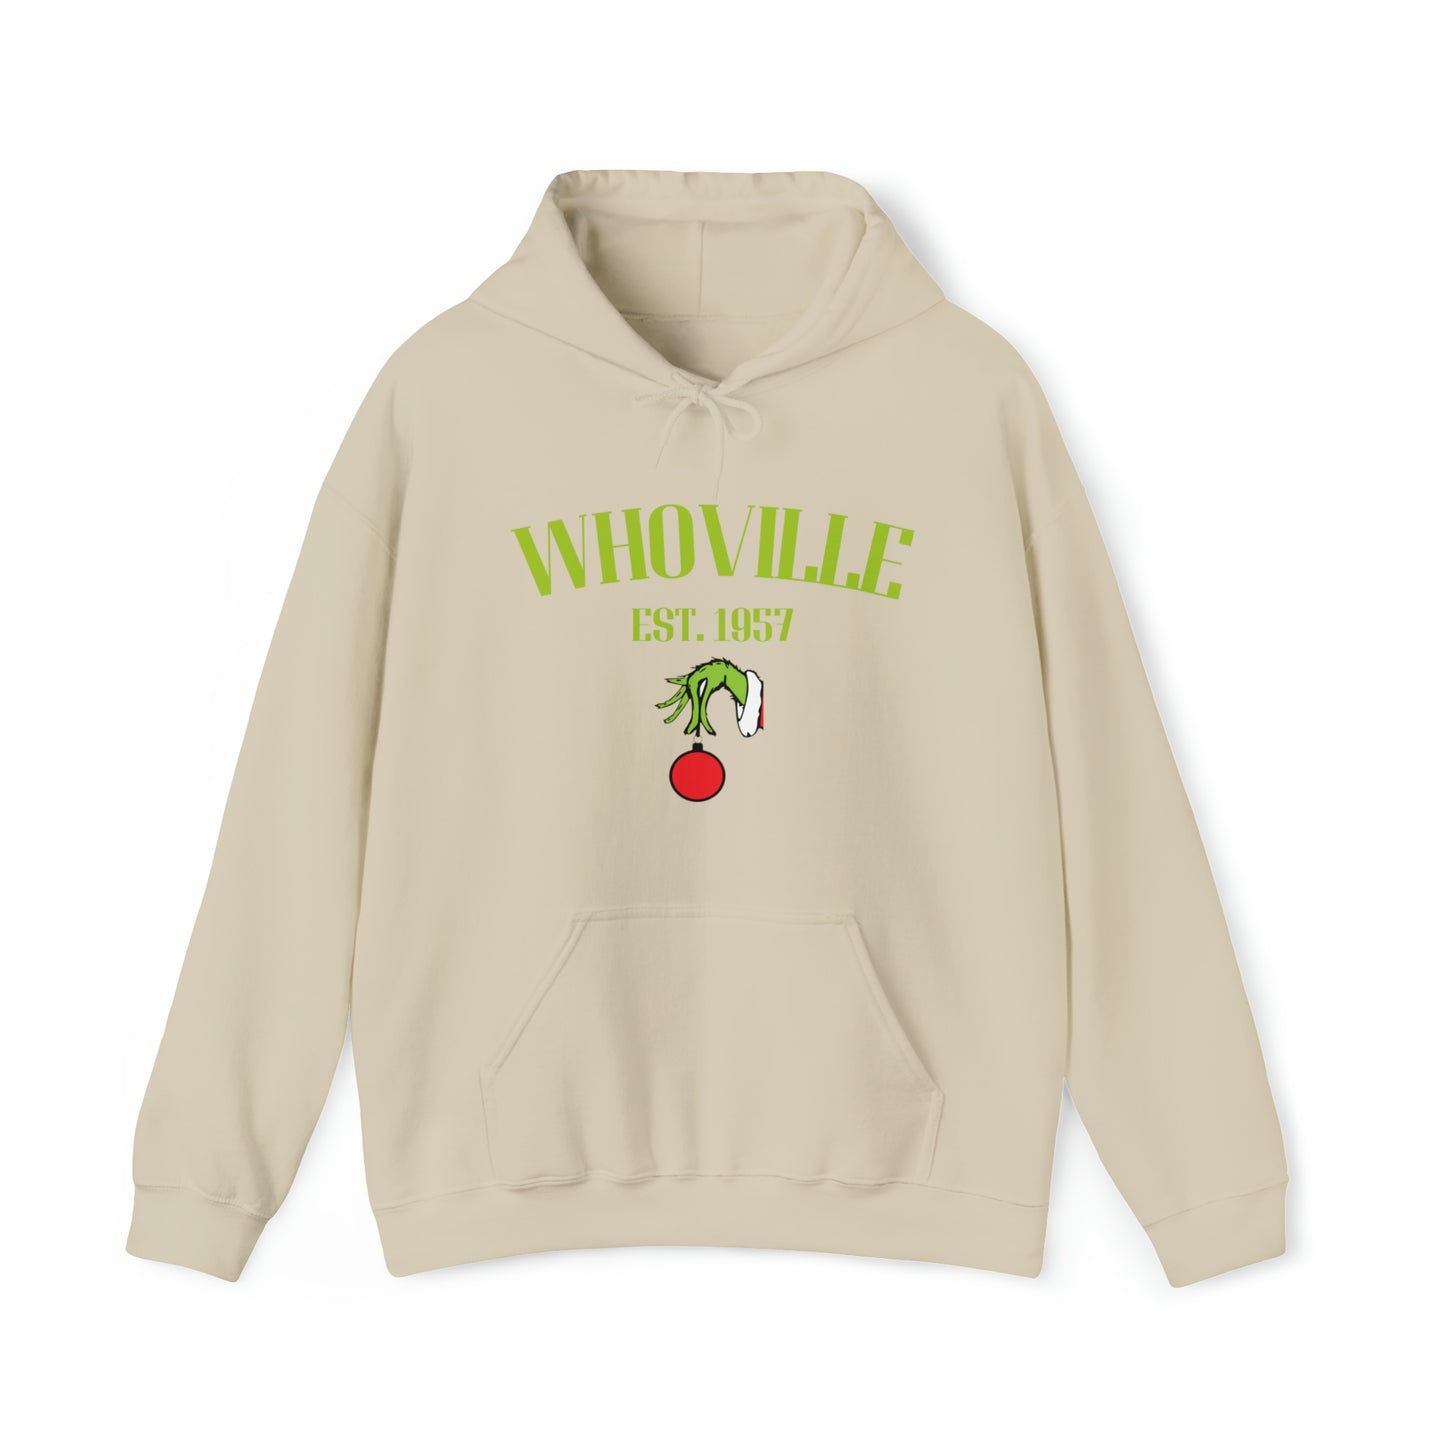 Whoville Unisex Heavy Blend Hooded Sweatshirt